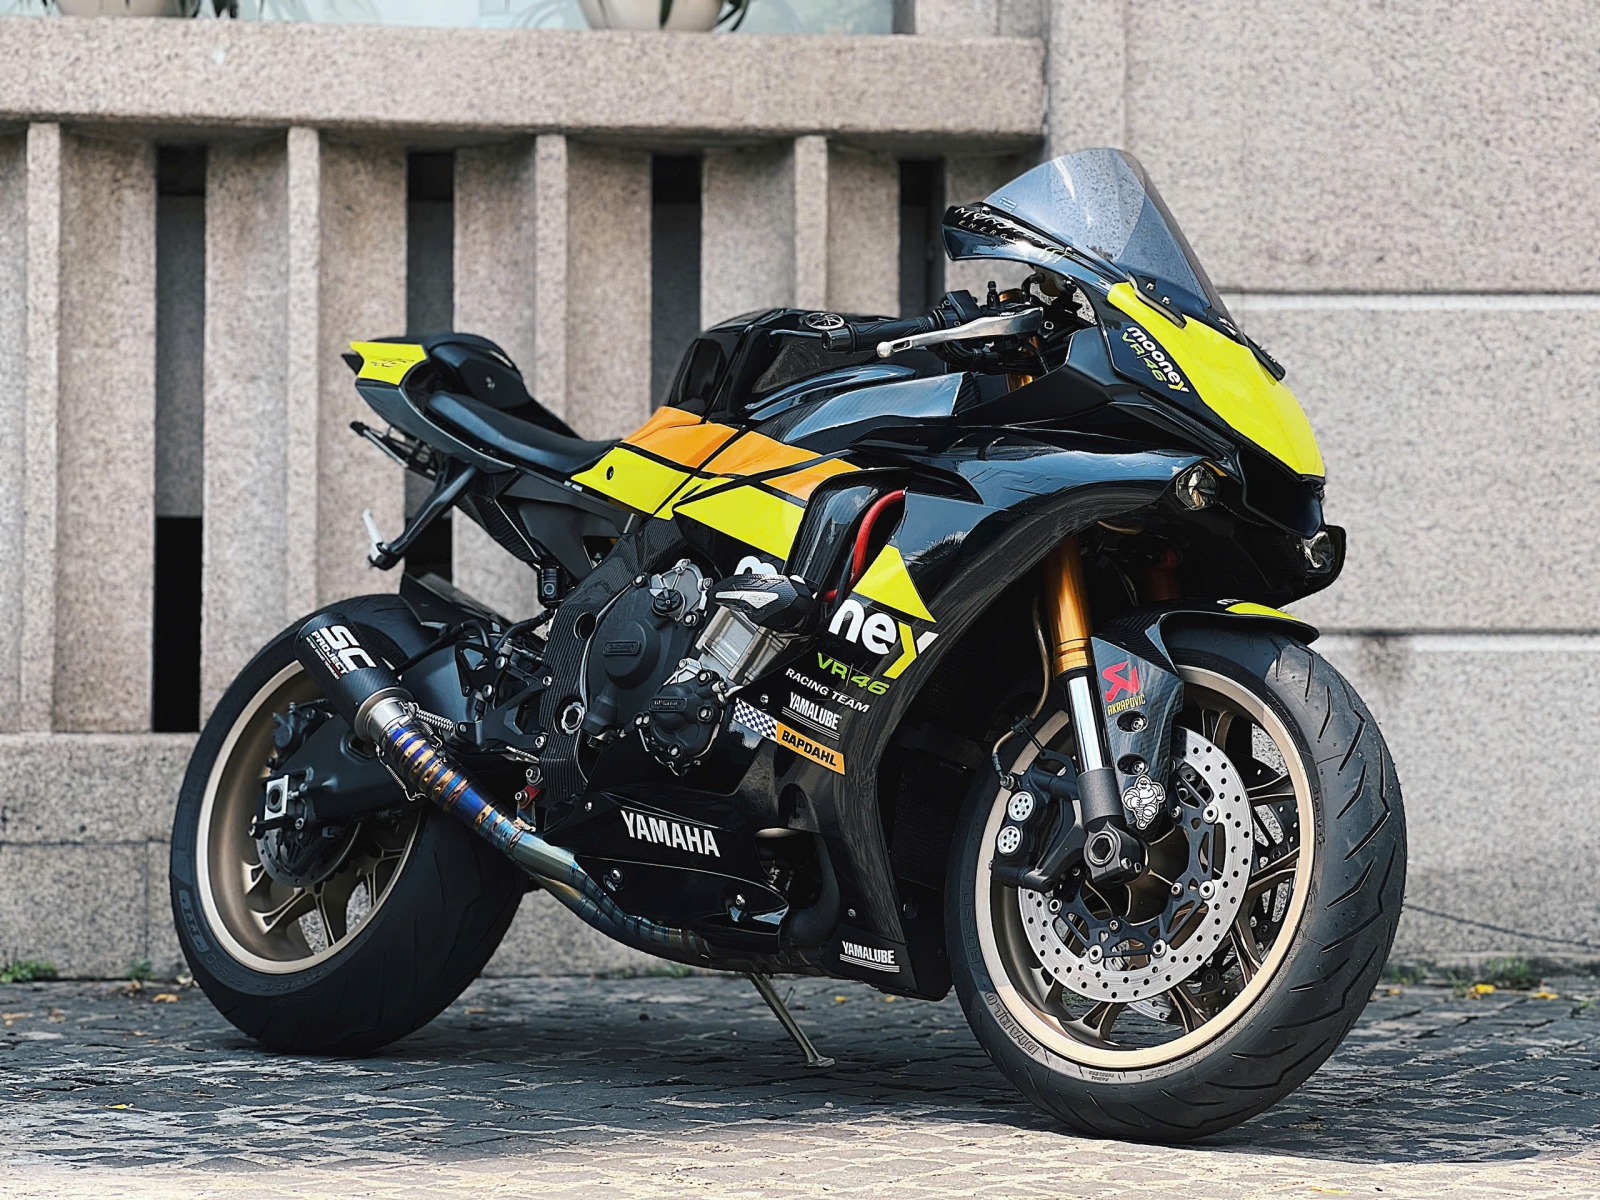 577 . Yamaha R1 60th Anniversary Edition model 2016